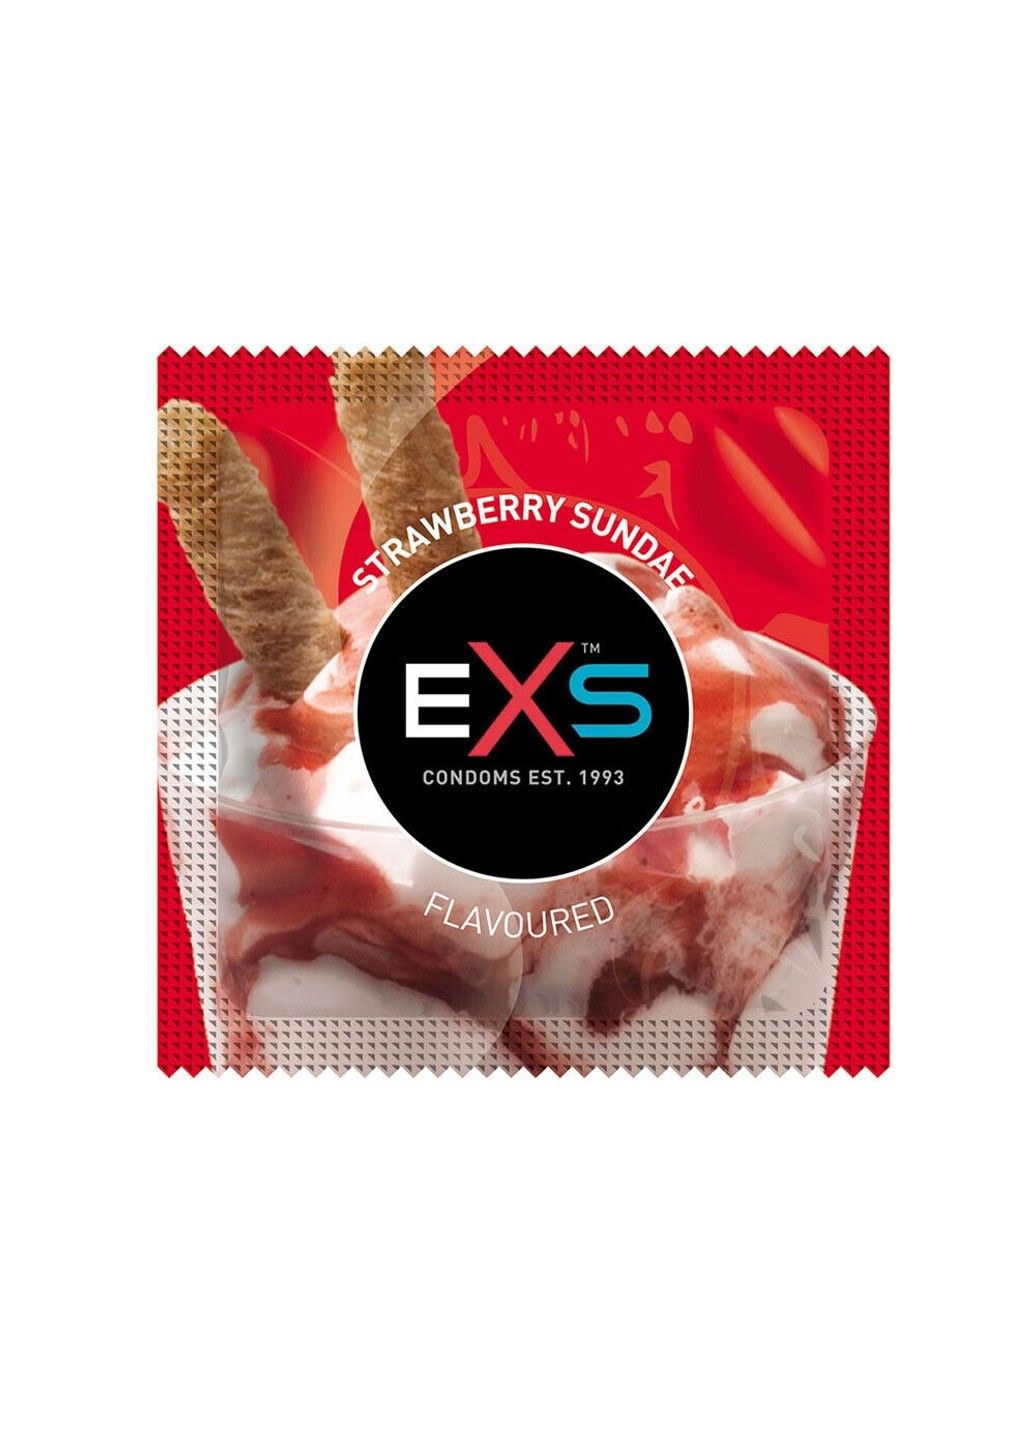 Презерватив со вкусом клубники Flavoured strawberry sundae Веган за 5 шт EXS (290699211)